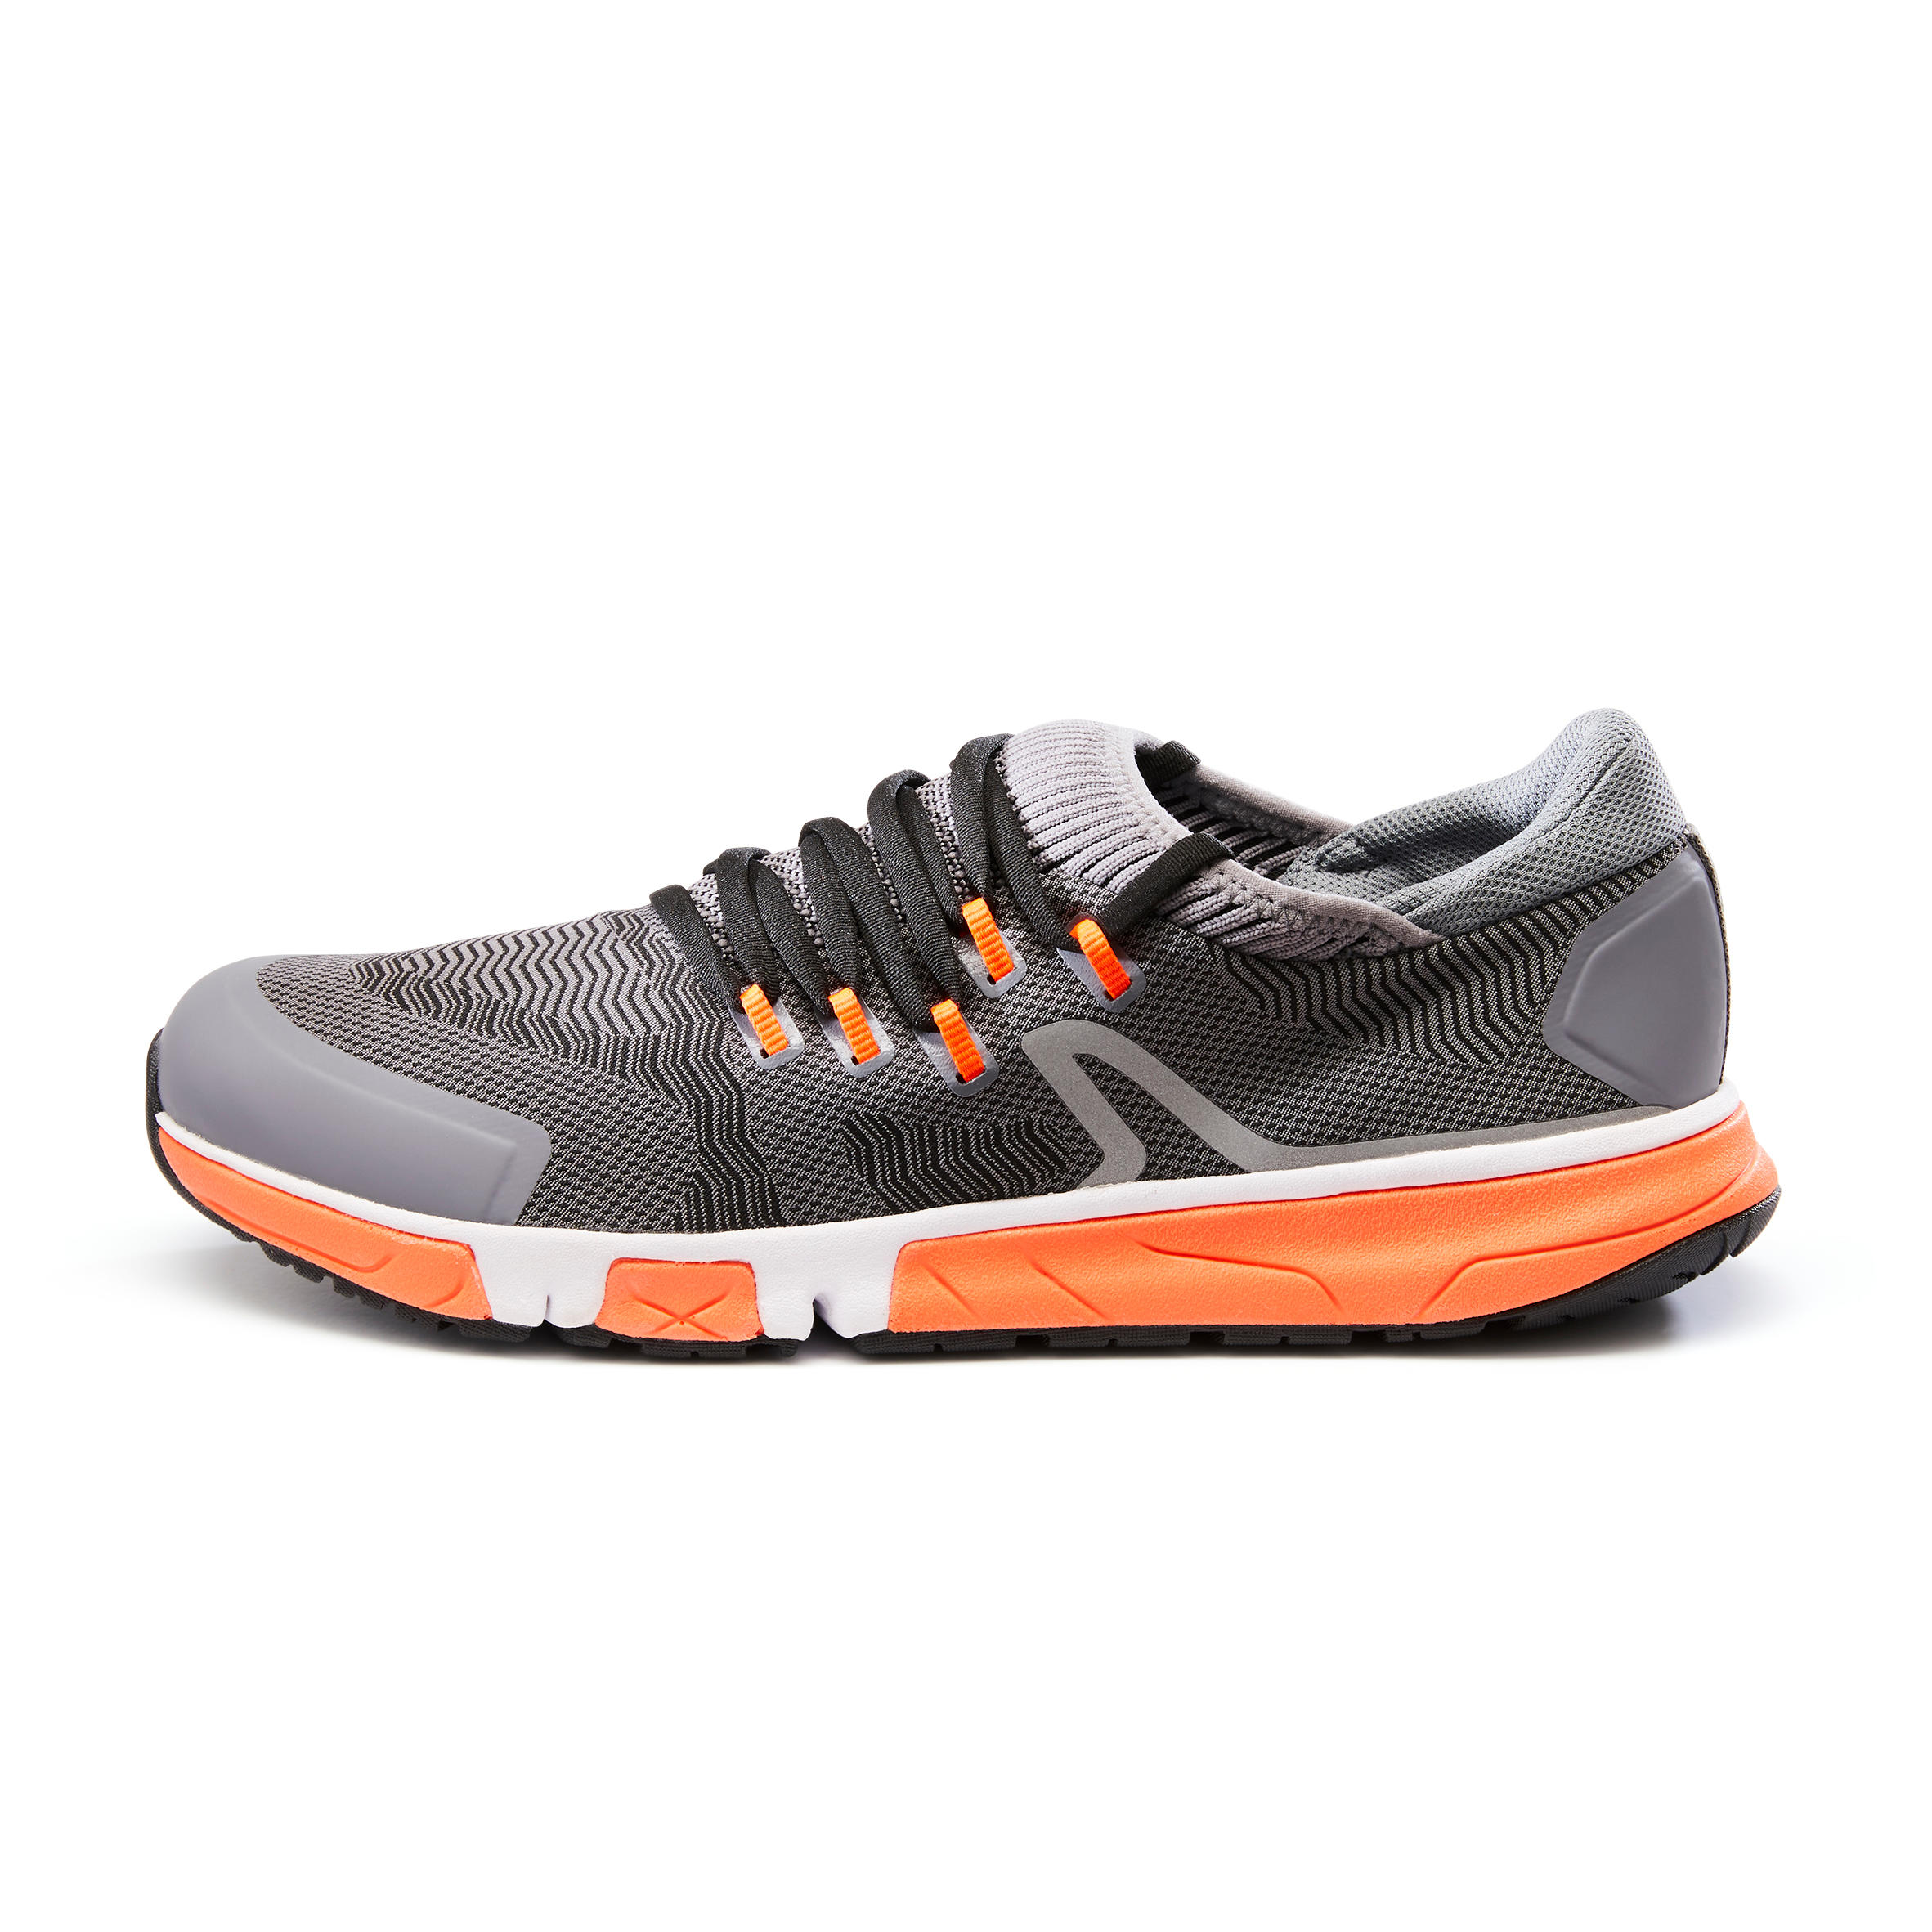 RW 900 long-distance fitness walking shoes - grey/orange 7/12